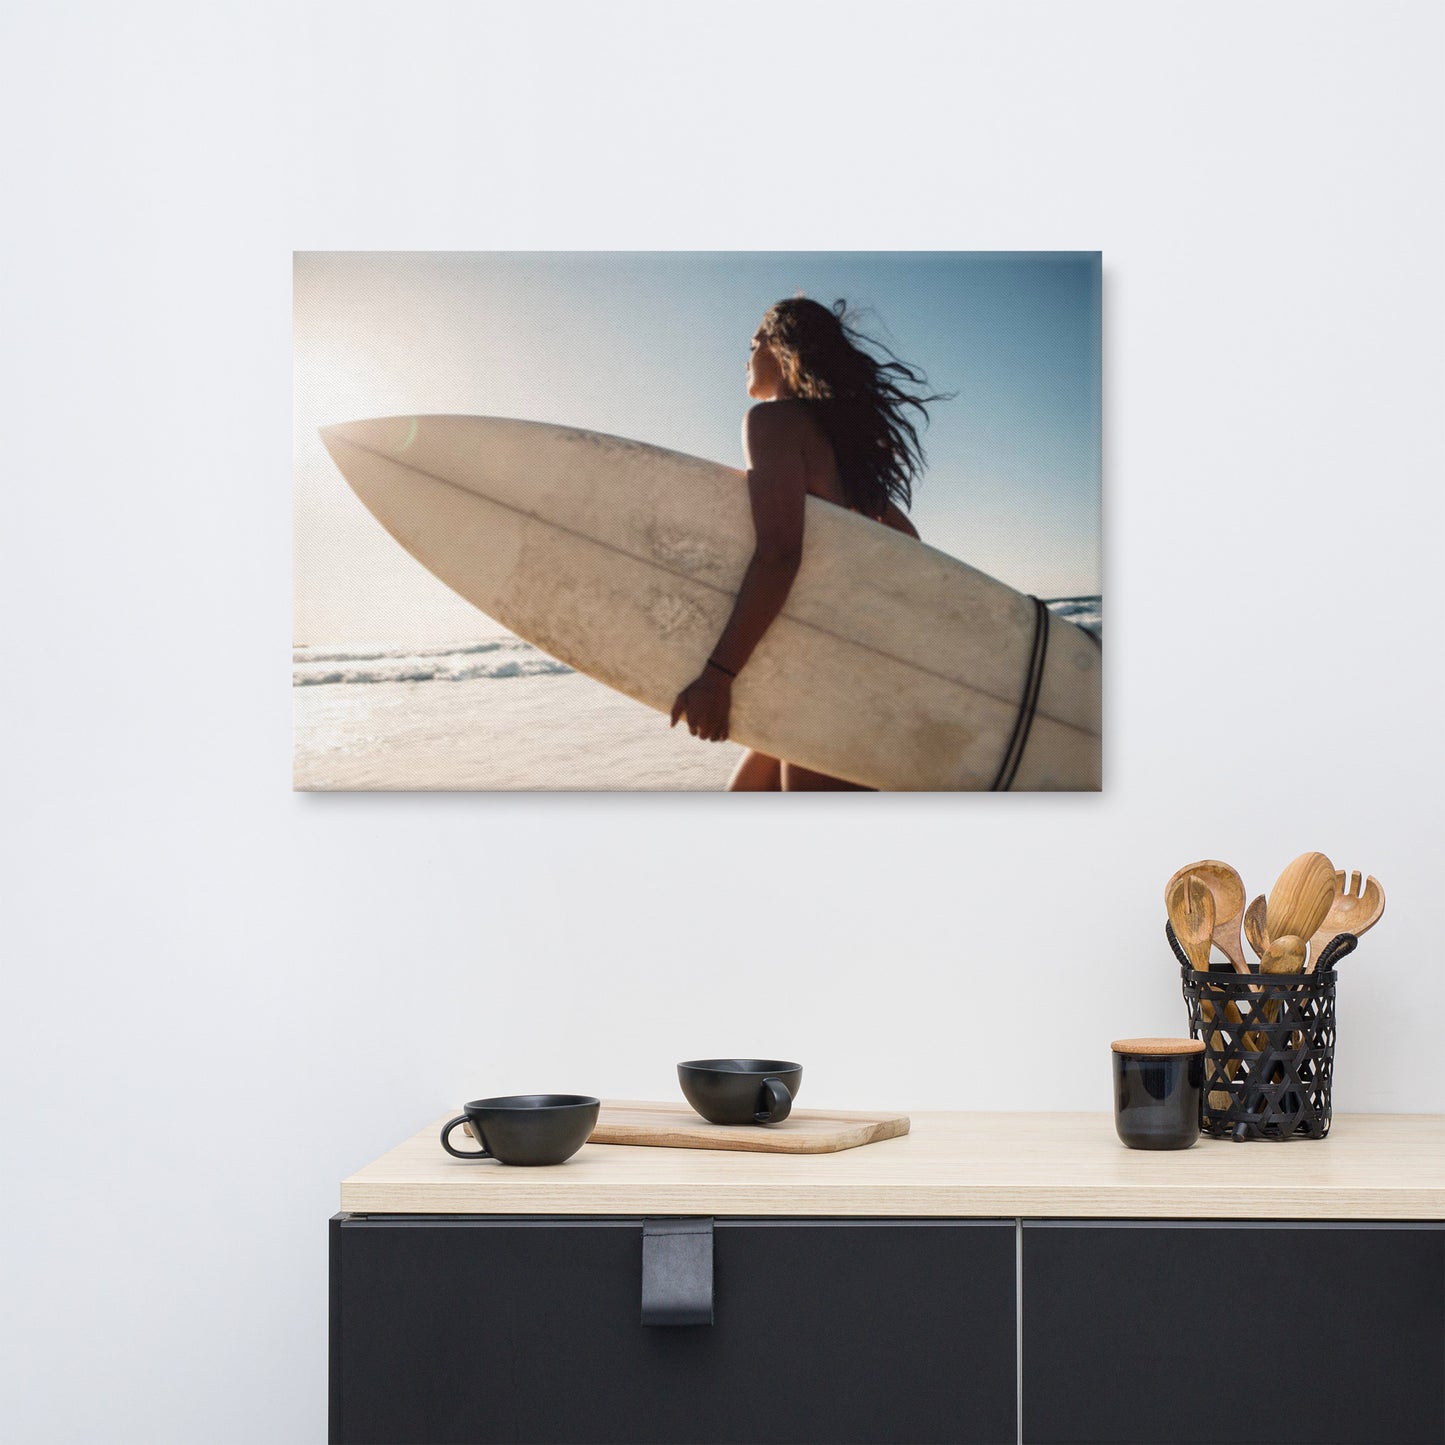 Coastal Calm Surfing Lifestyle Photograph Canvas Wall Art Print